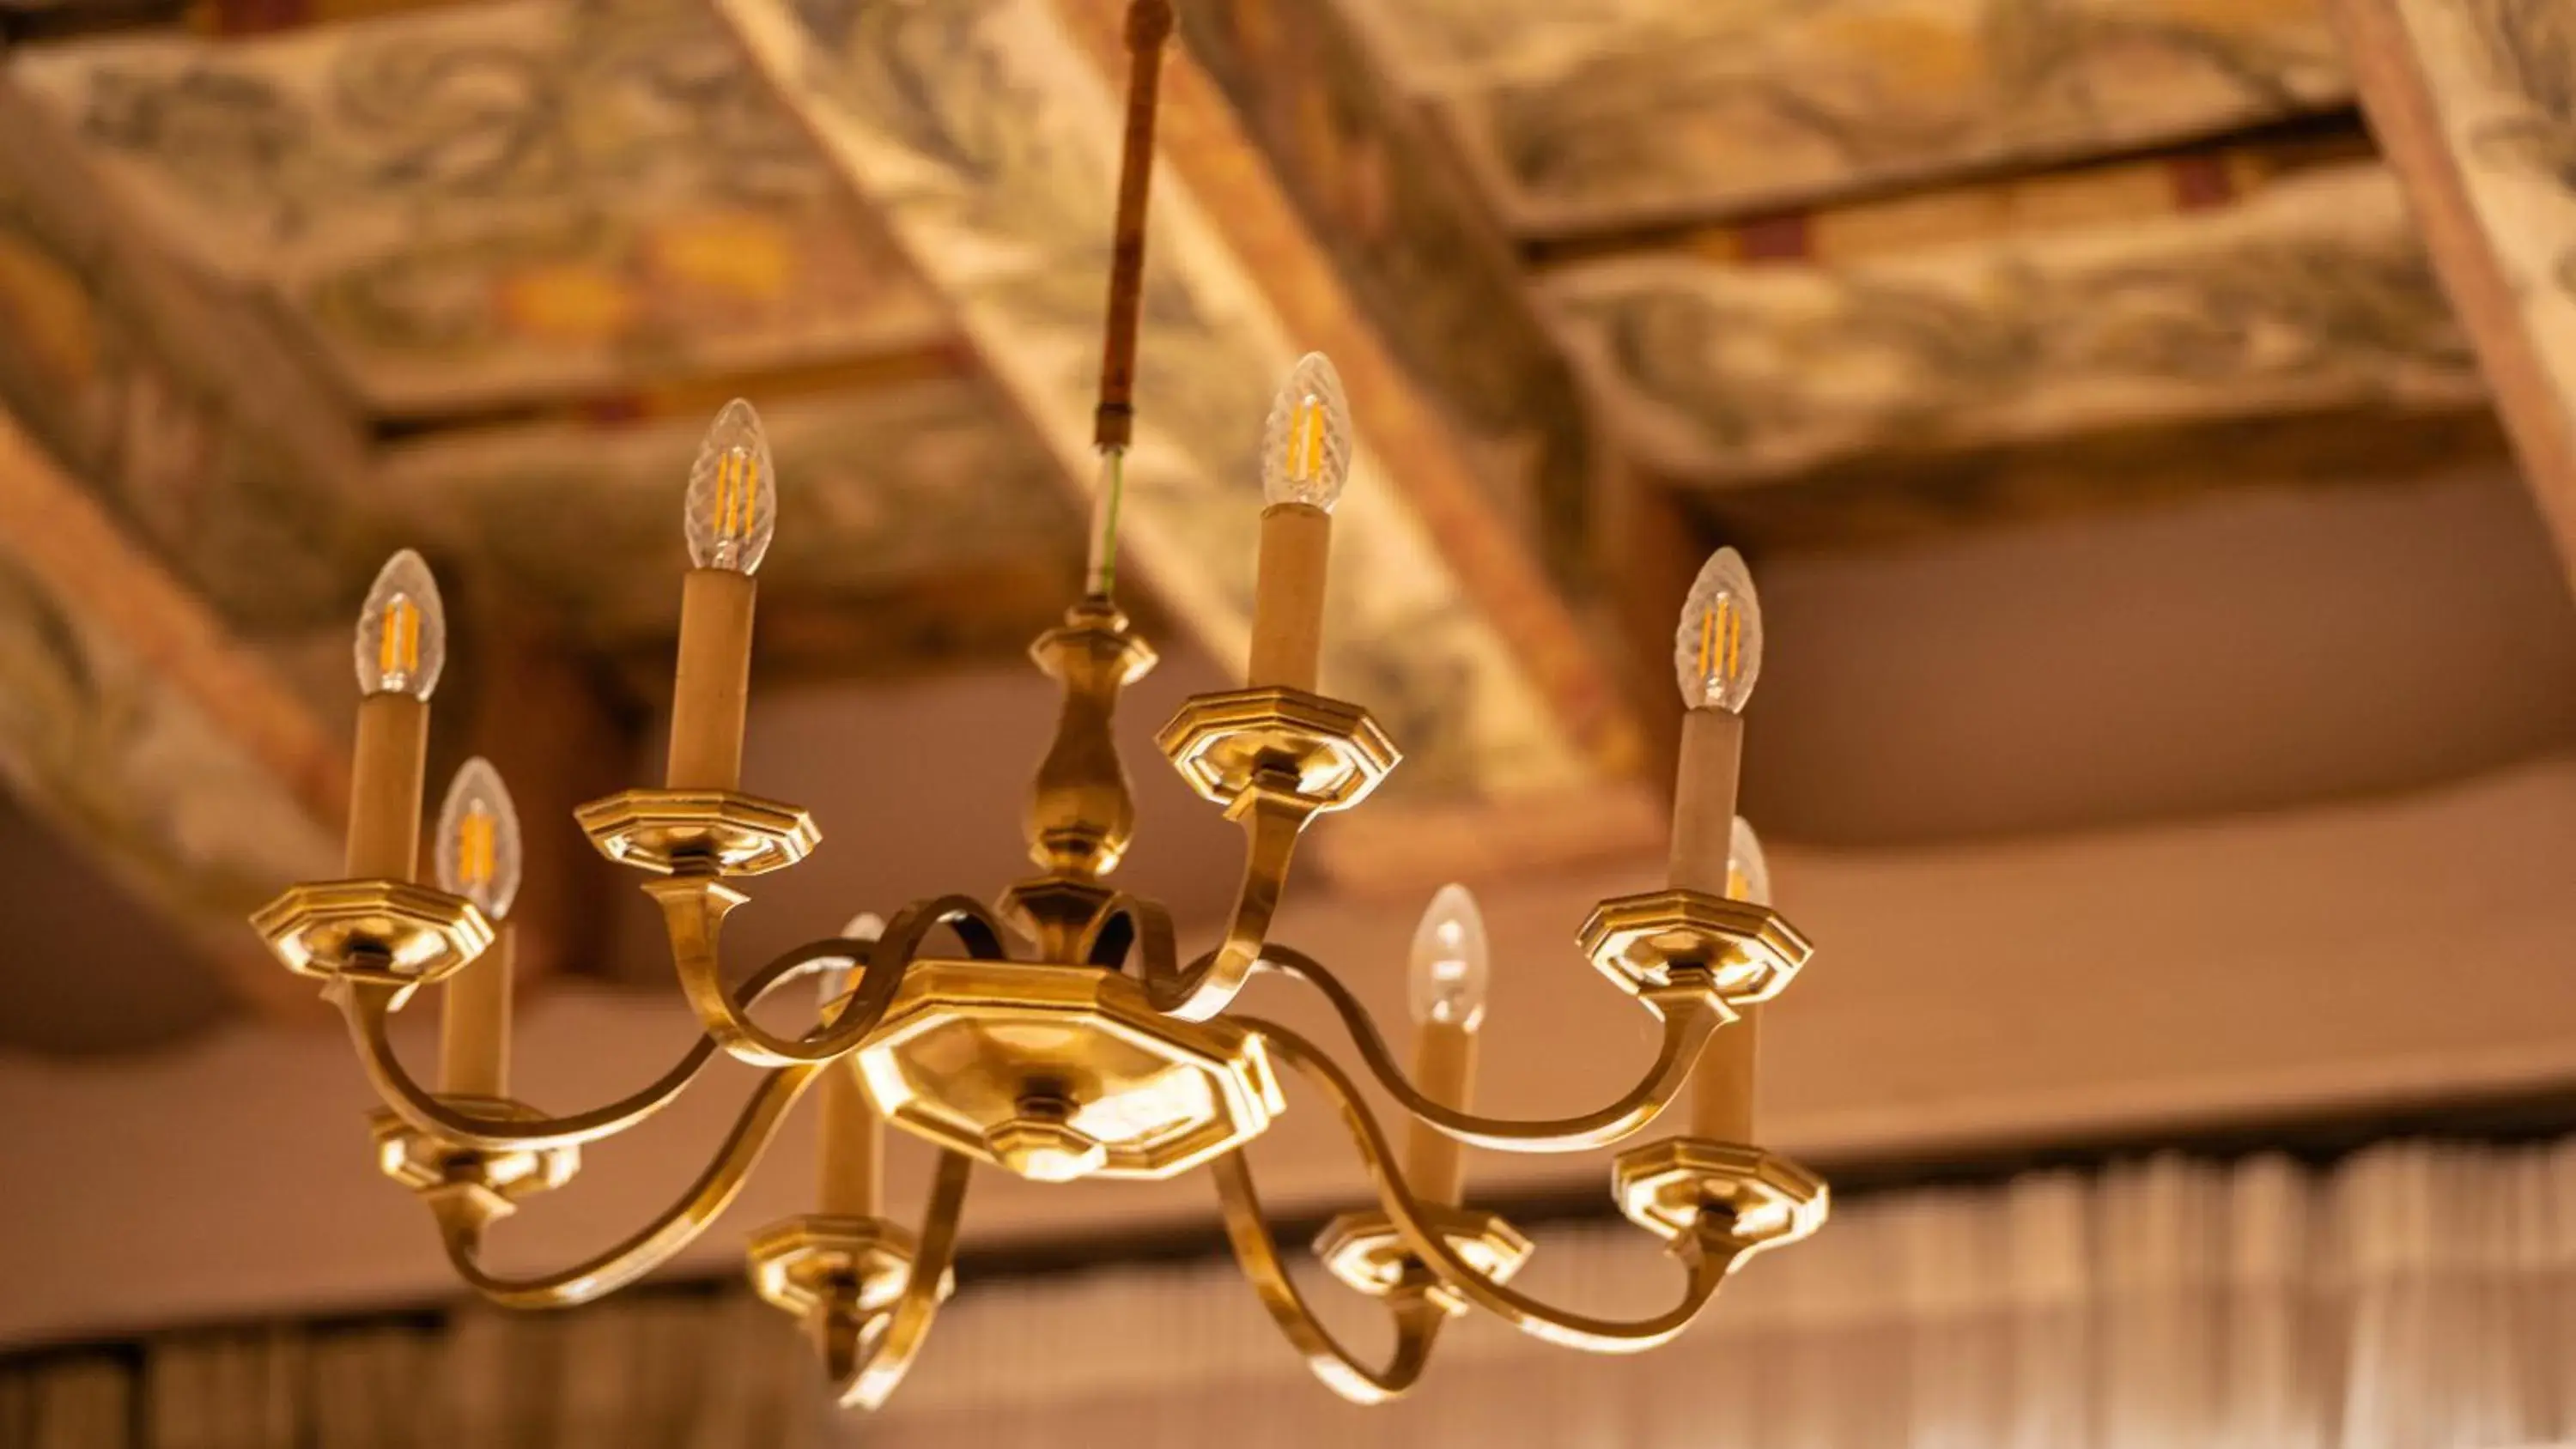 Decorative detail in Hotel Golden Key Prague Castle